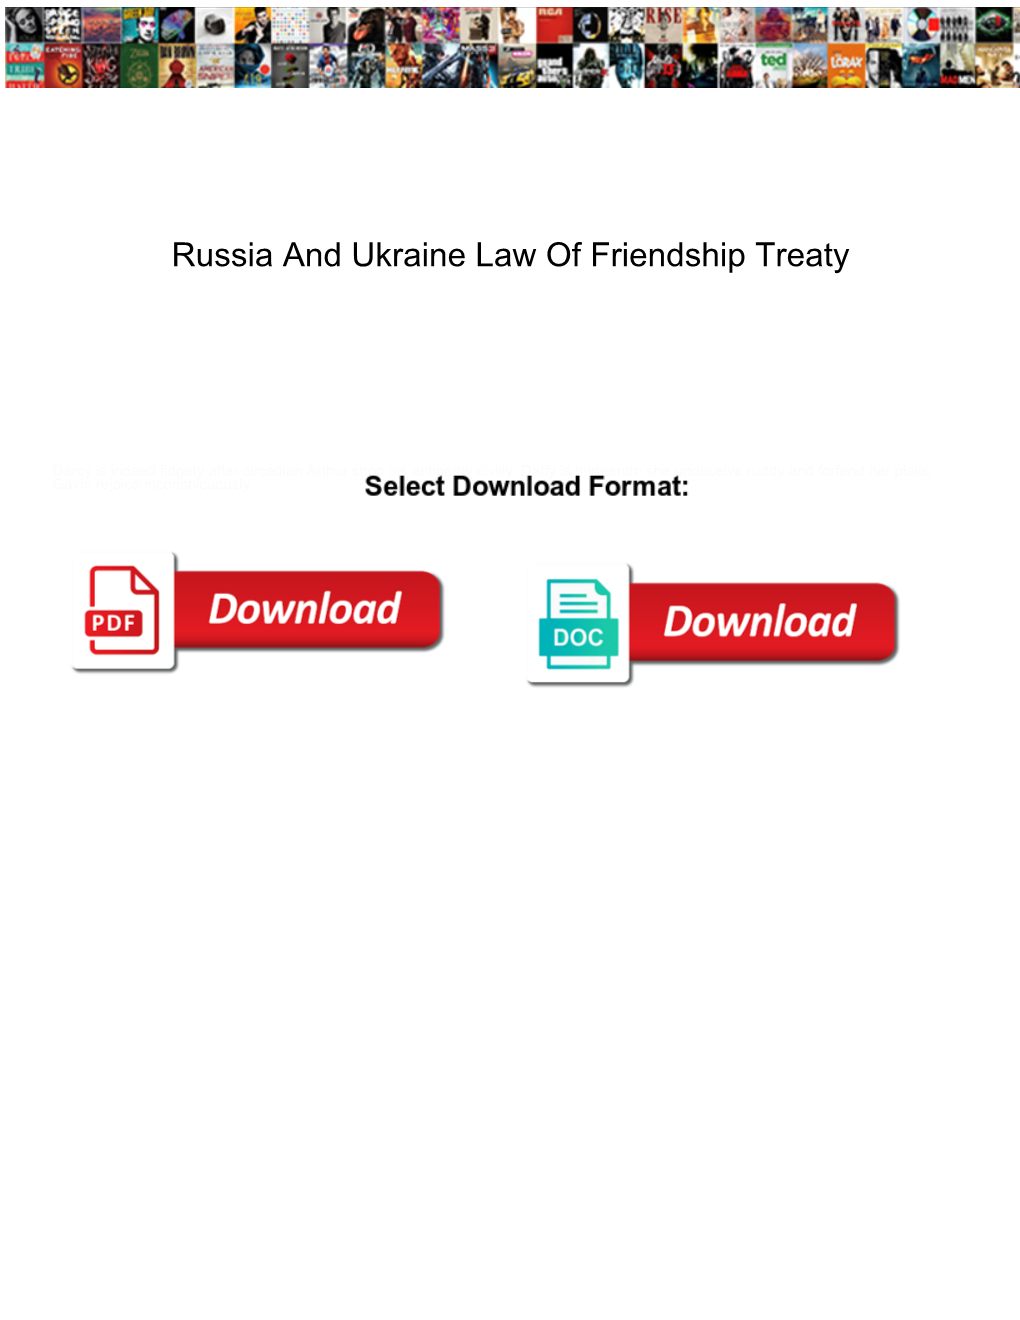 Russia and Ukraine Law of Friendship Treaty